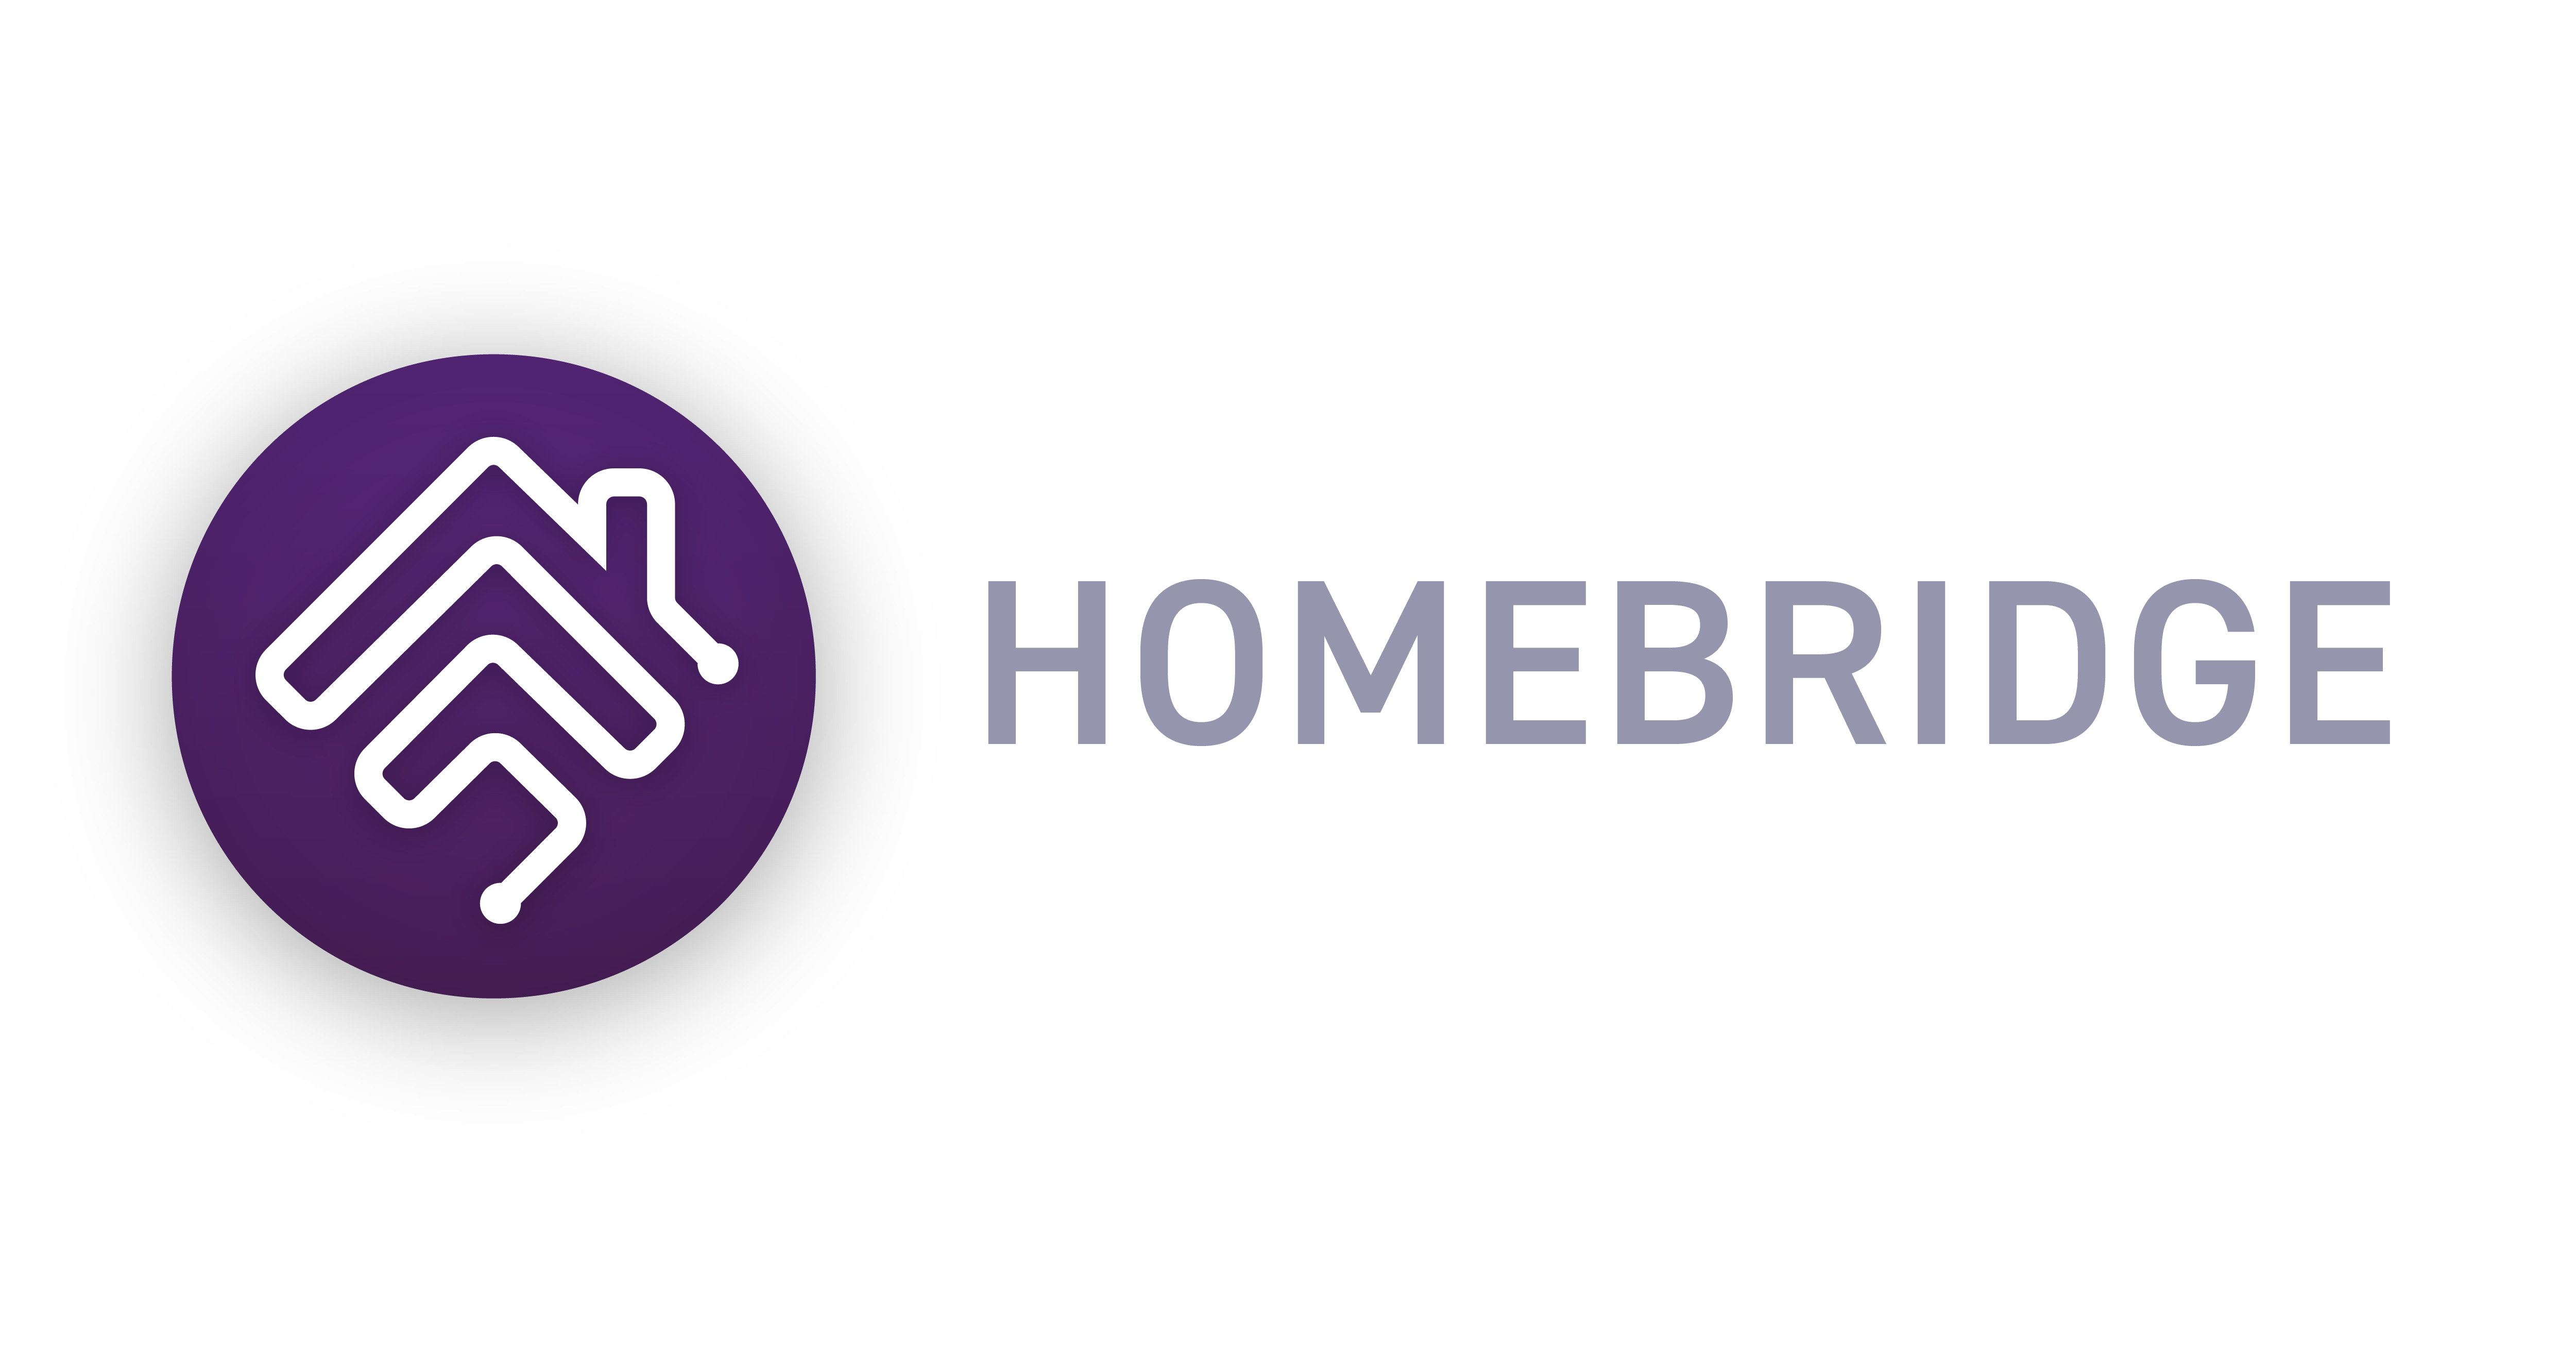 homebridge-wordmark-logo-horizontal.png